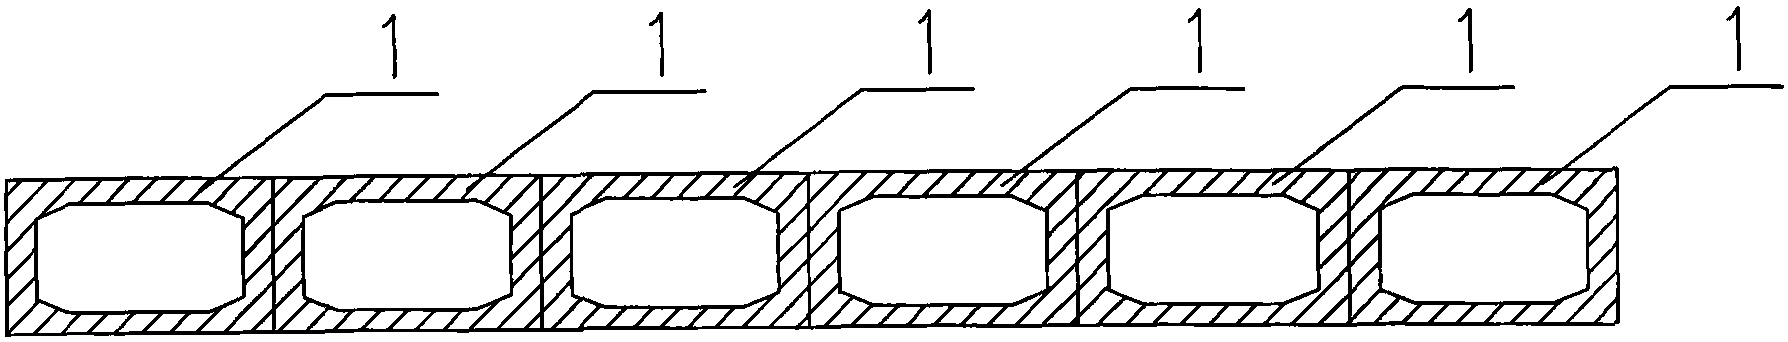 Construction method for assembling integral hollow slab bridge